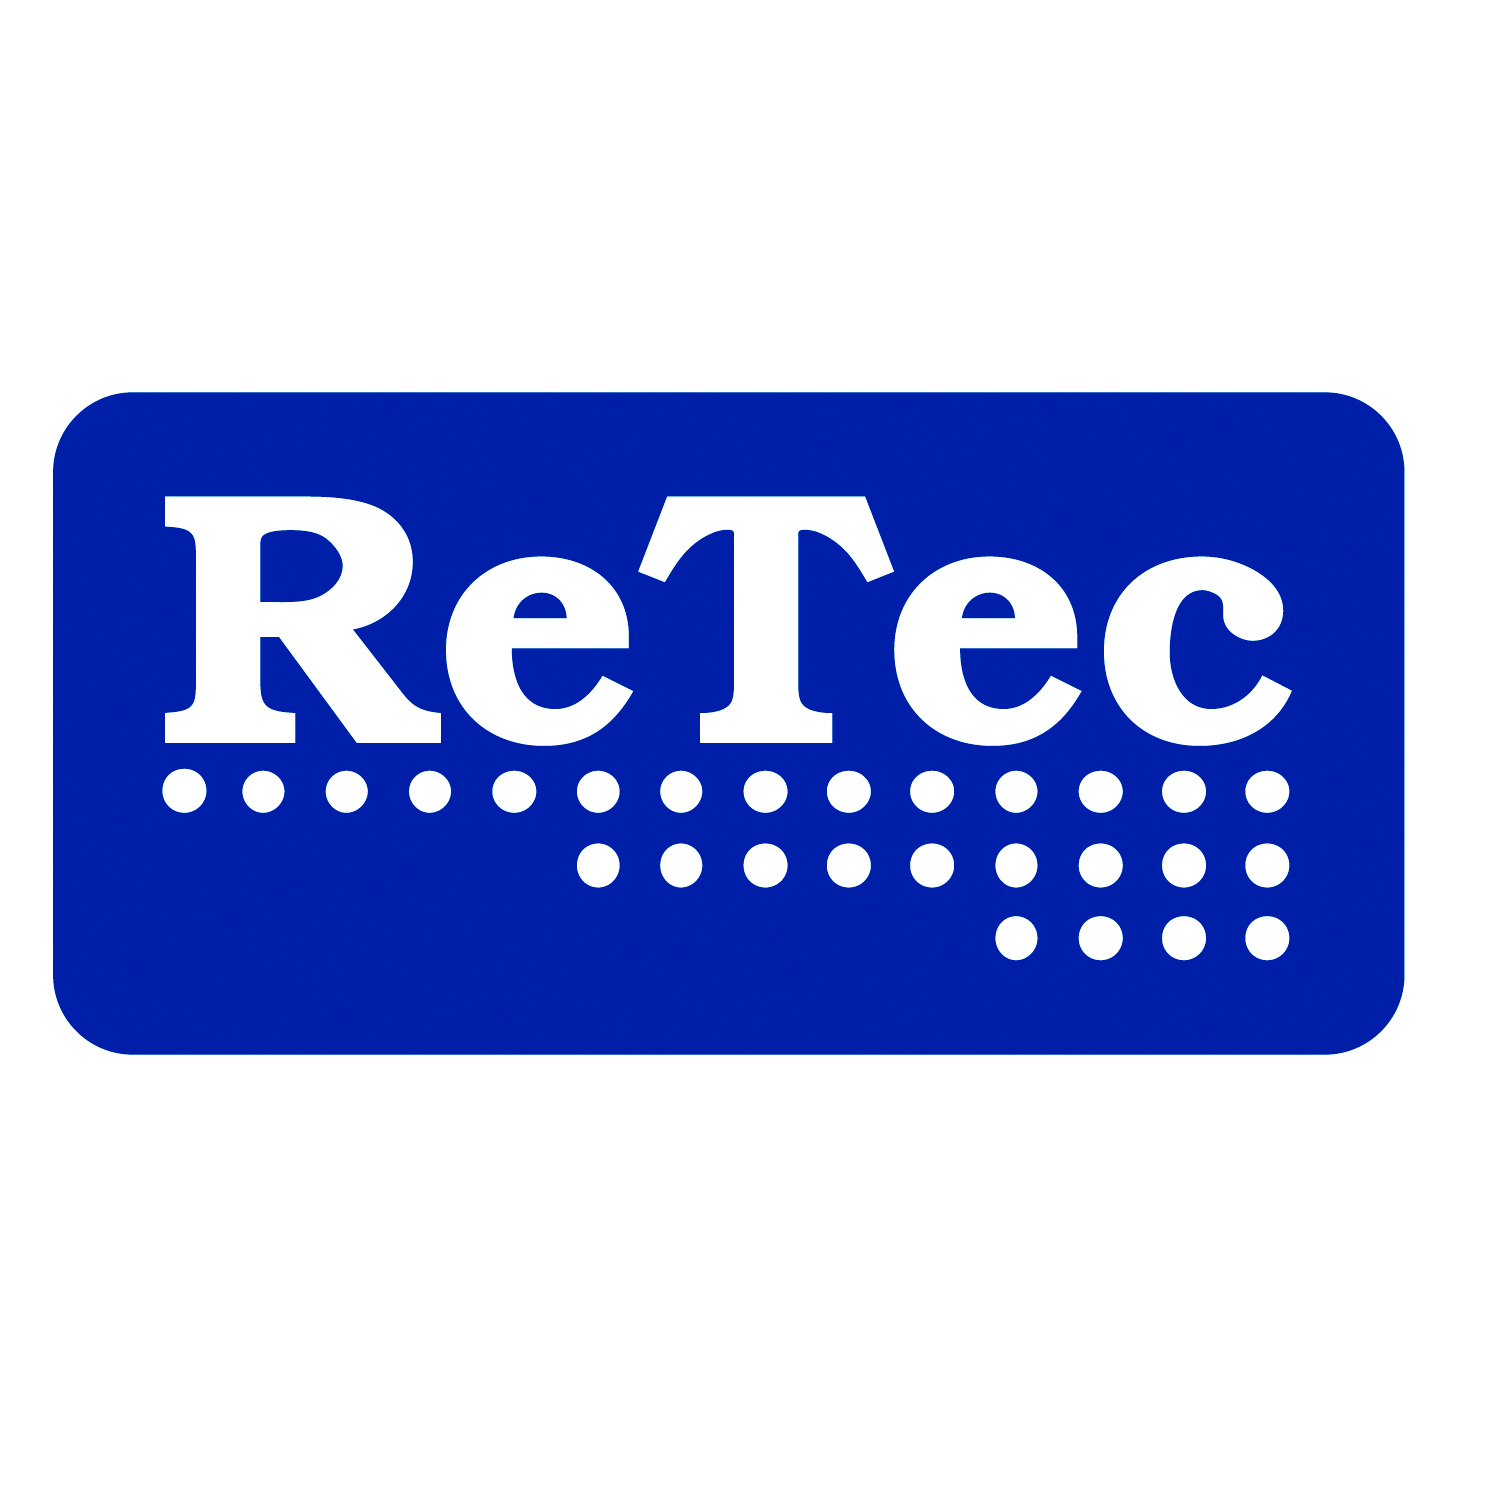 Retec Logo CMYK Stor Smart Object